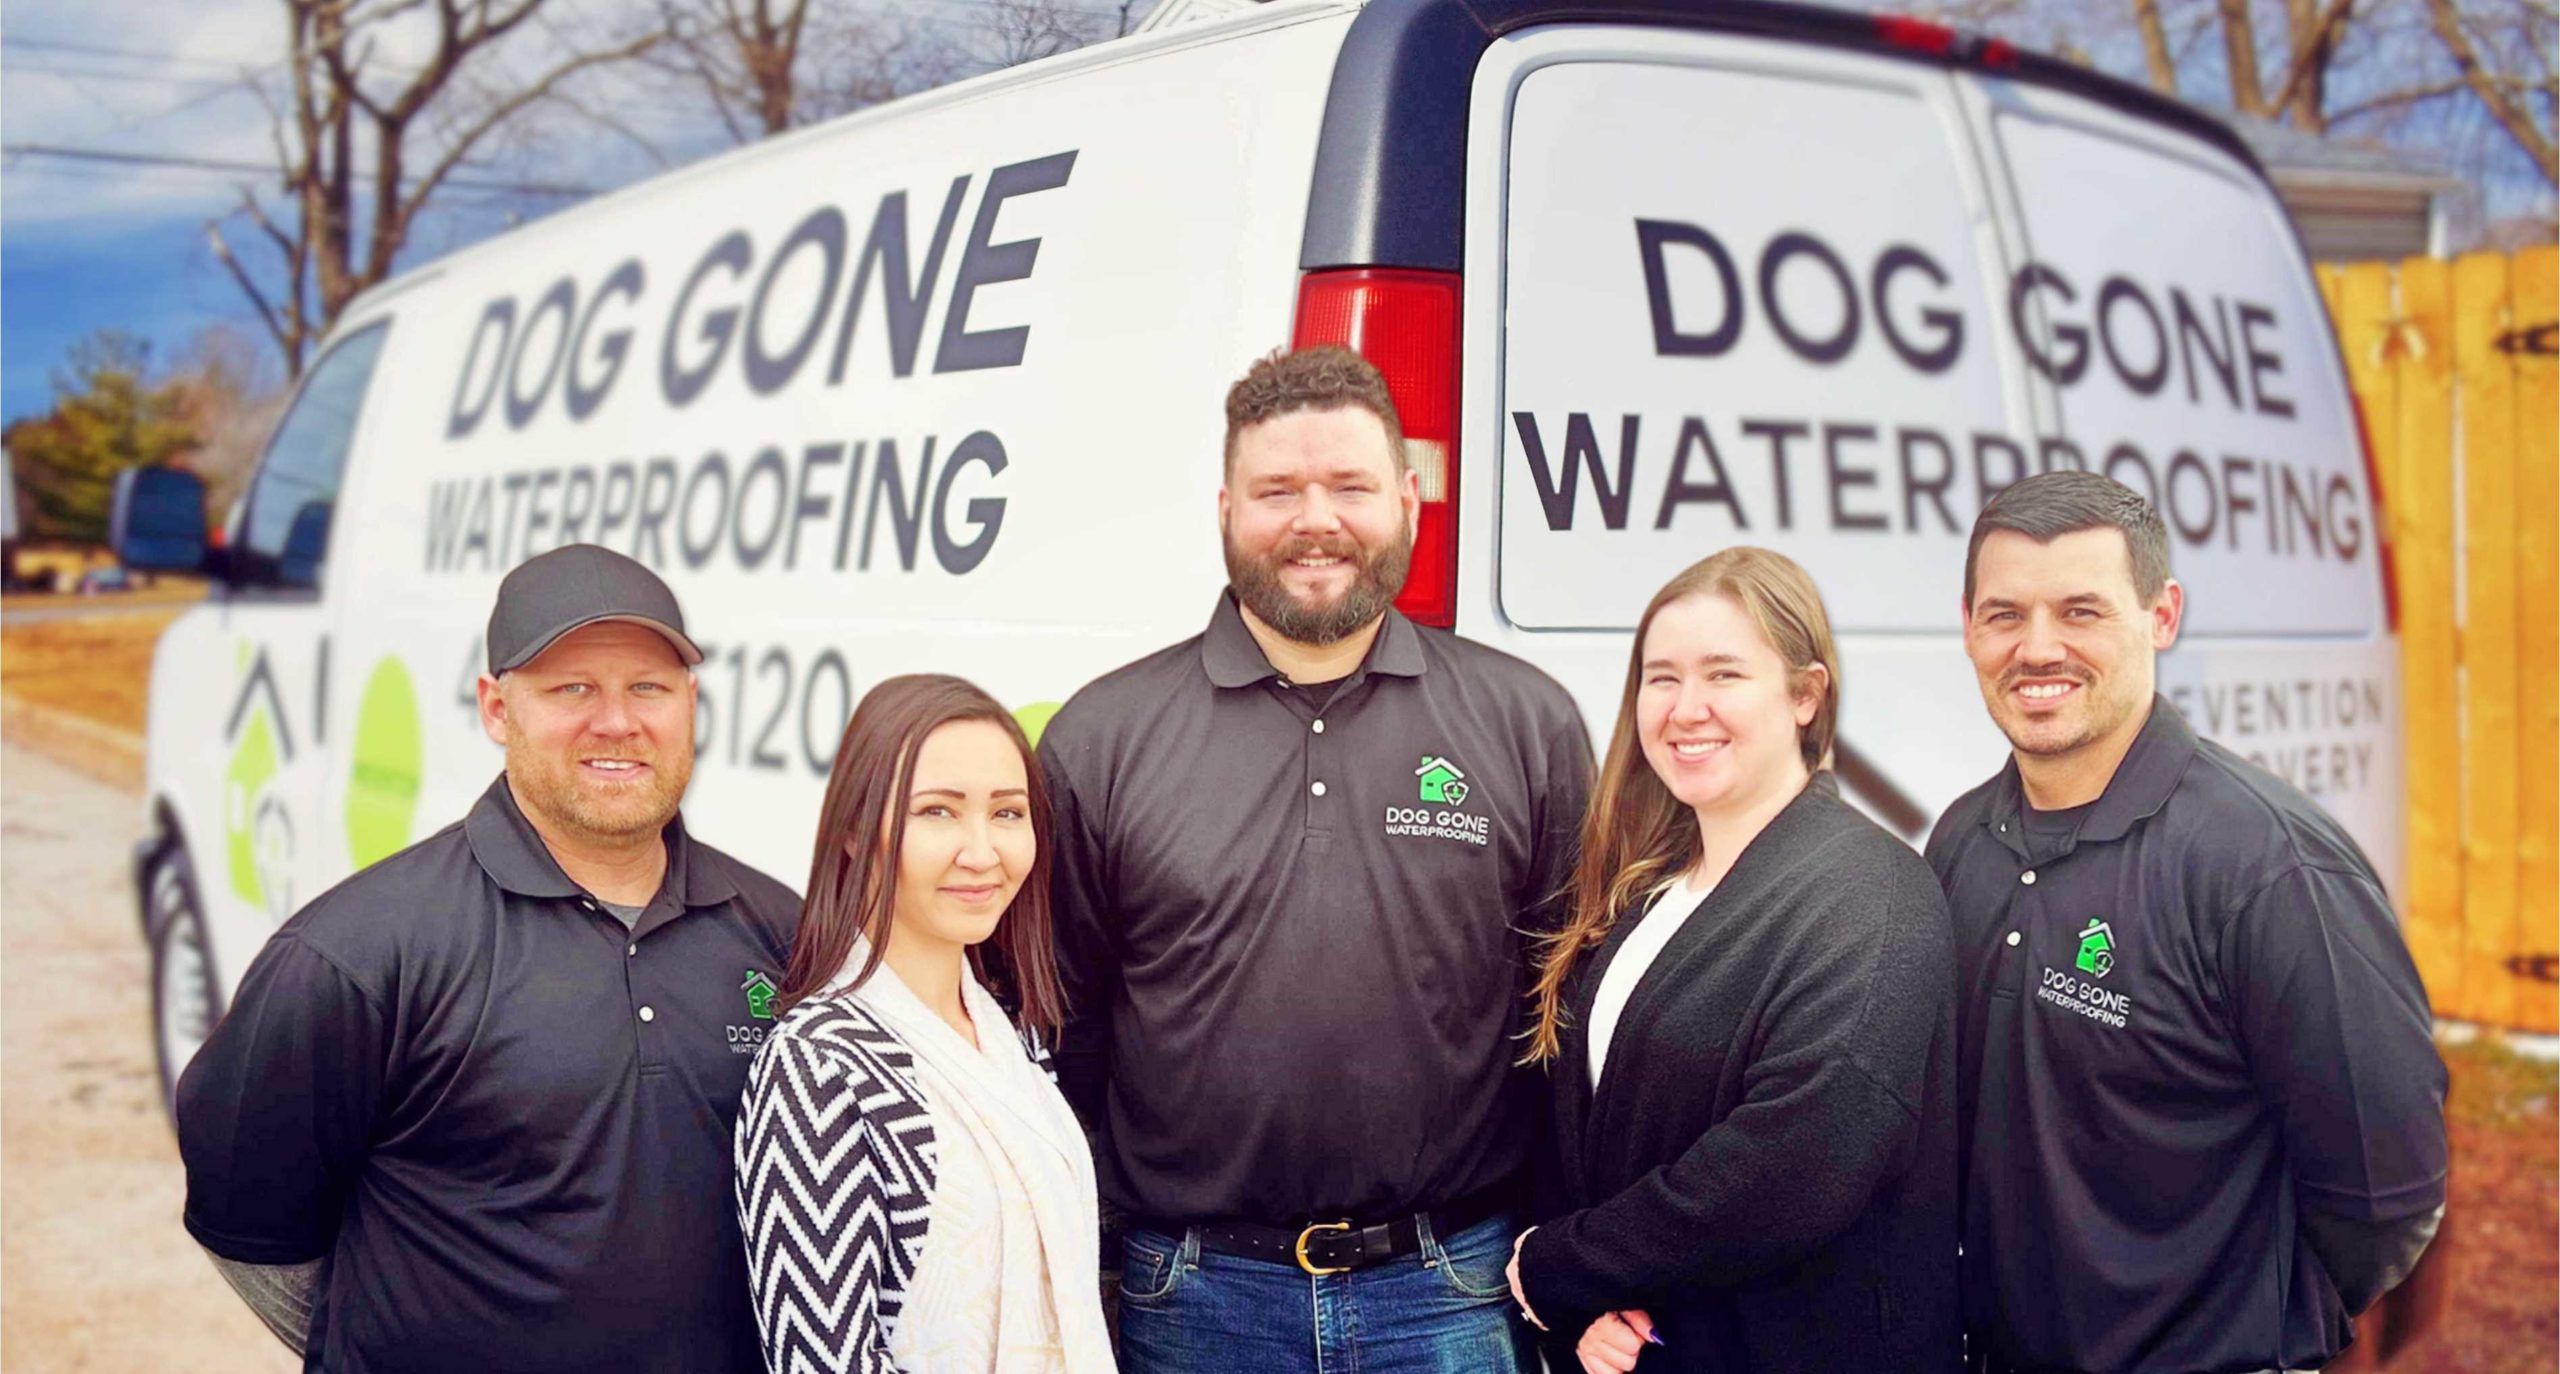 Dog Gone Waterproofing Springfield Missouri Team in Front of Van